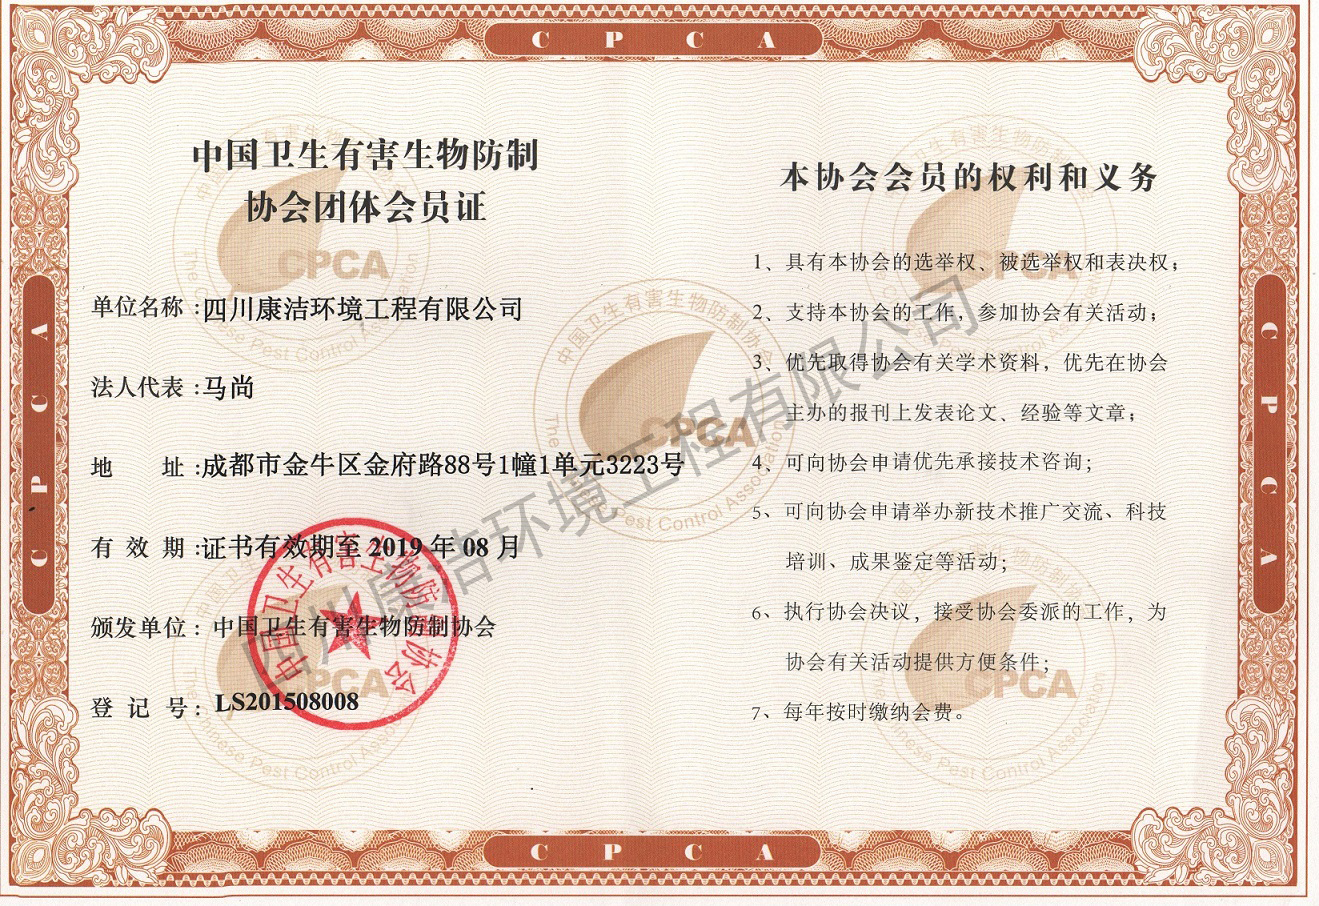 Membership card of China health pest control association